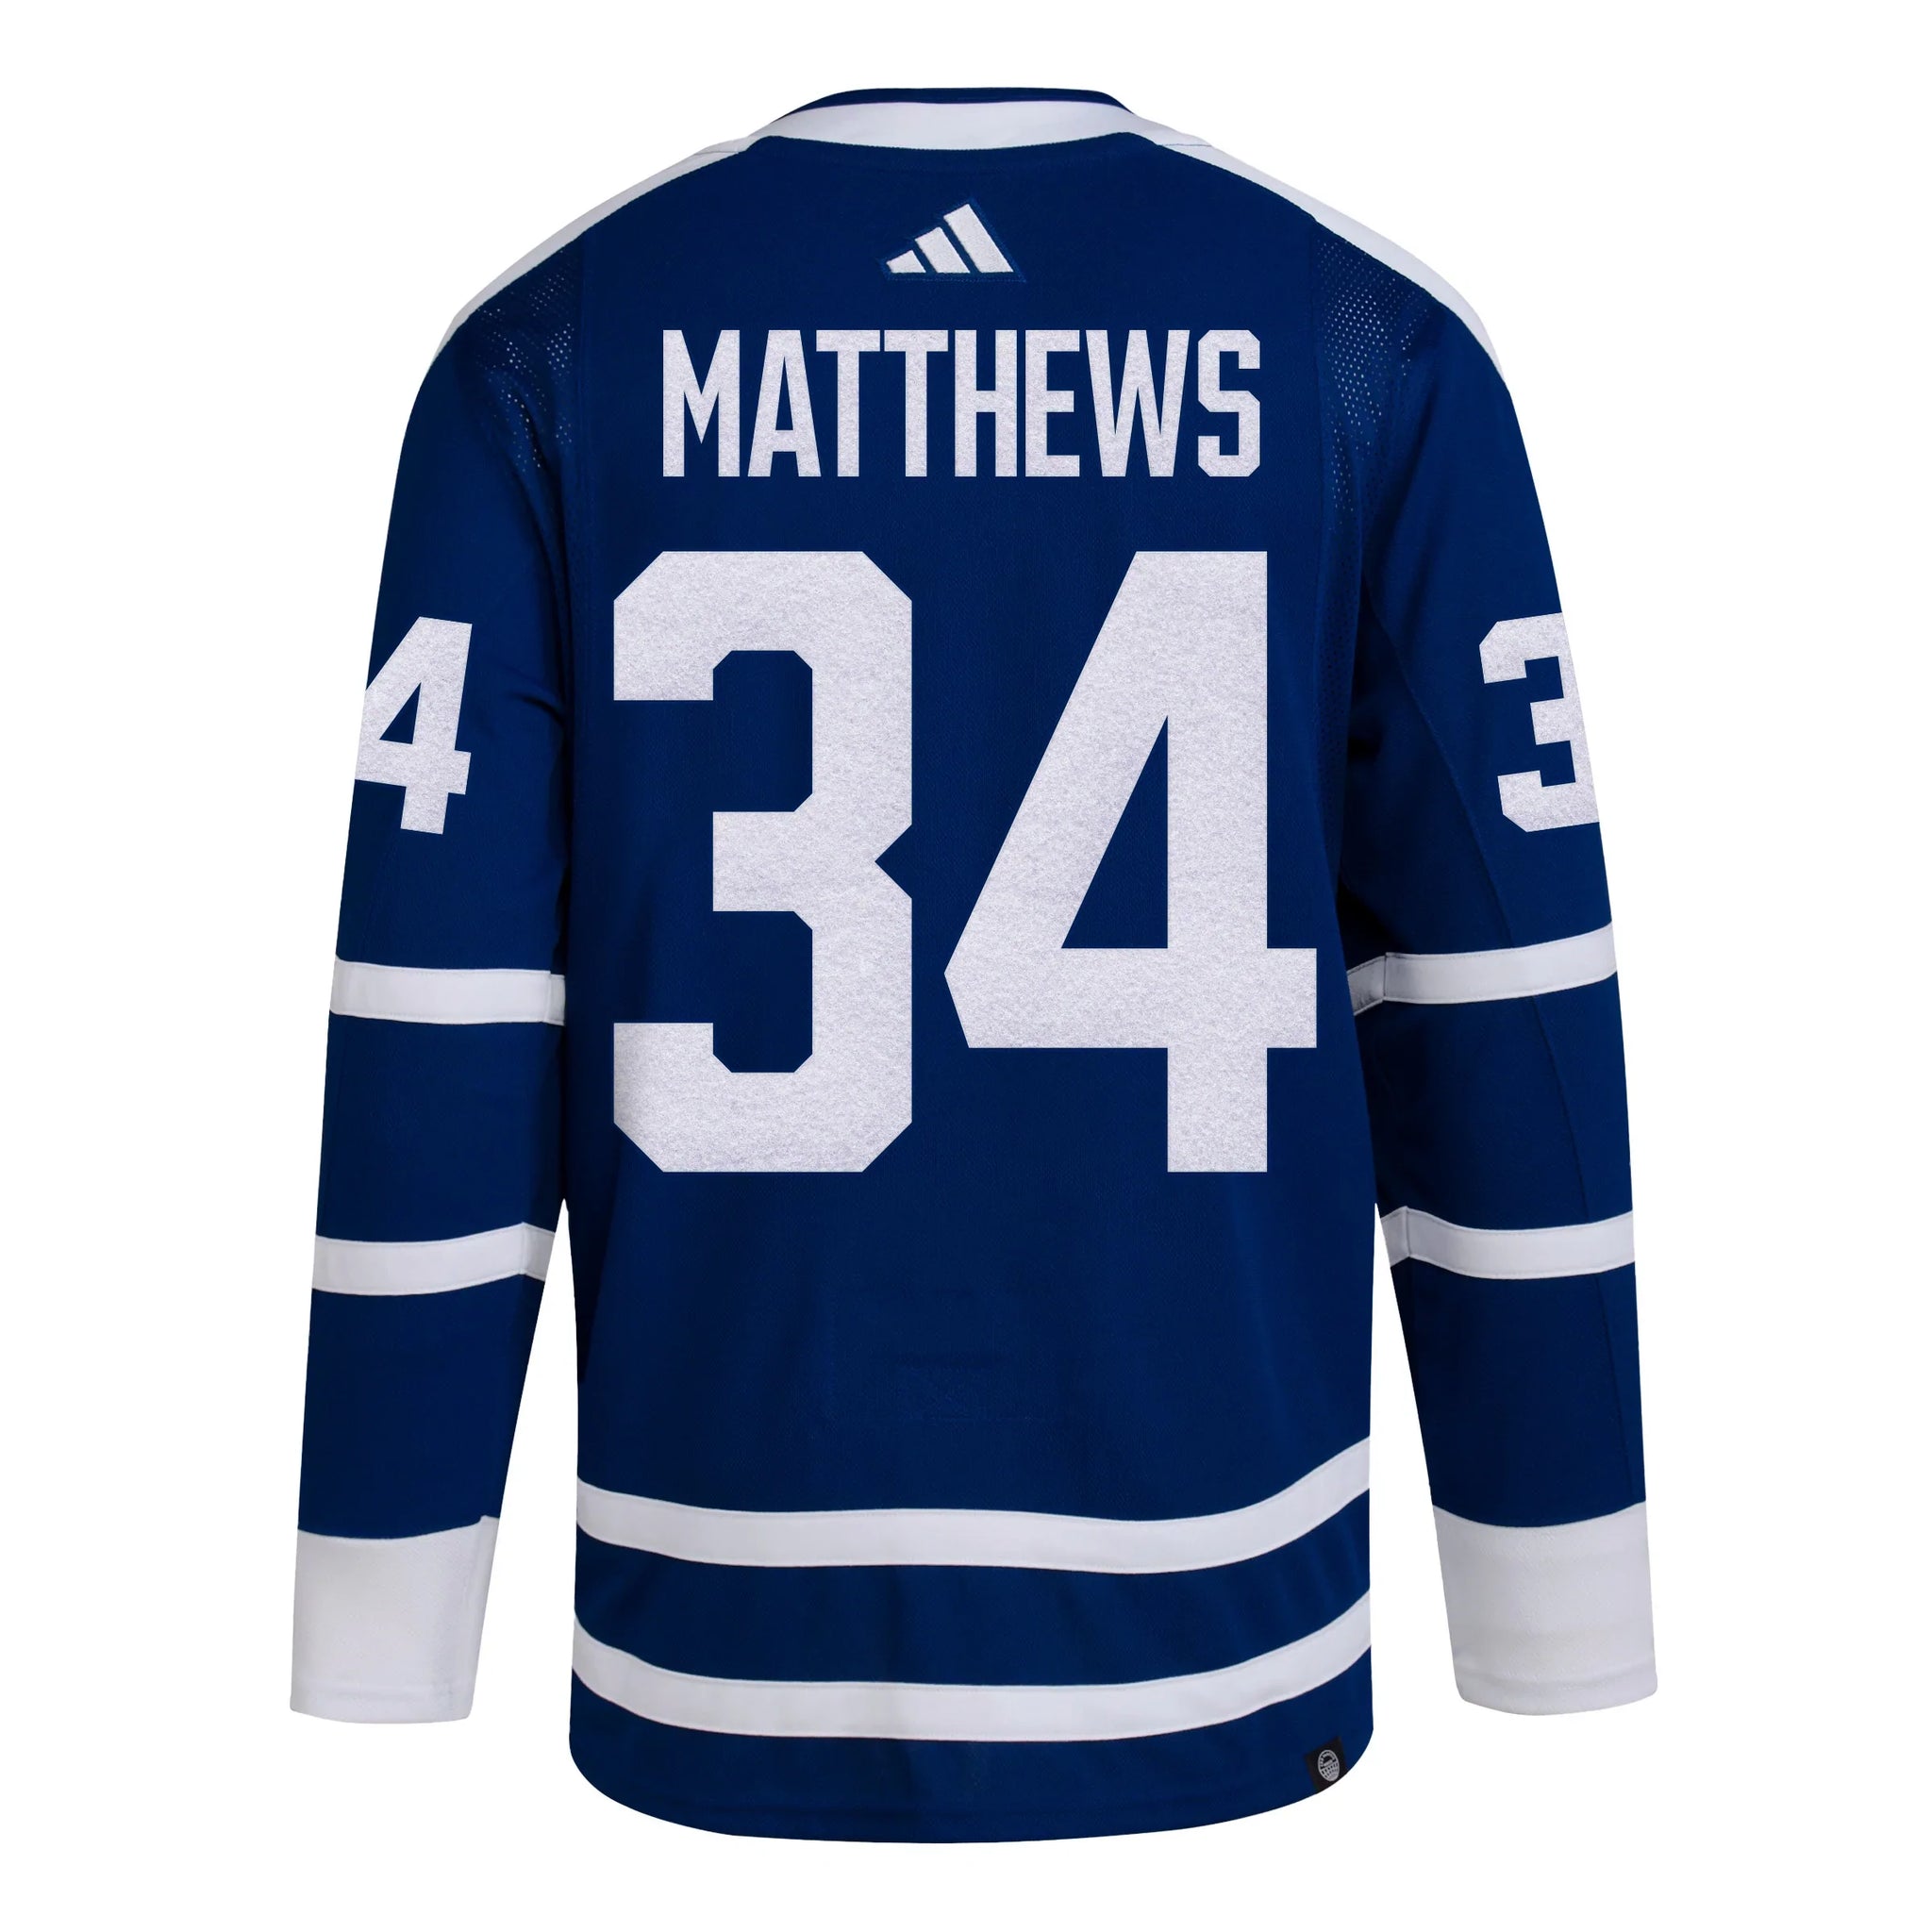 NHL, Shirts, Authentic Toronto Maple Leafs Hockey Jersey